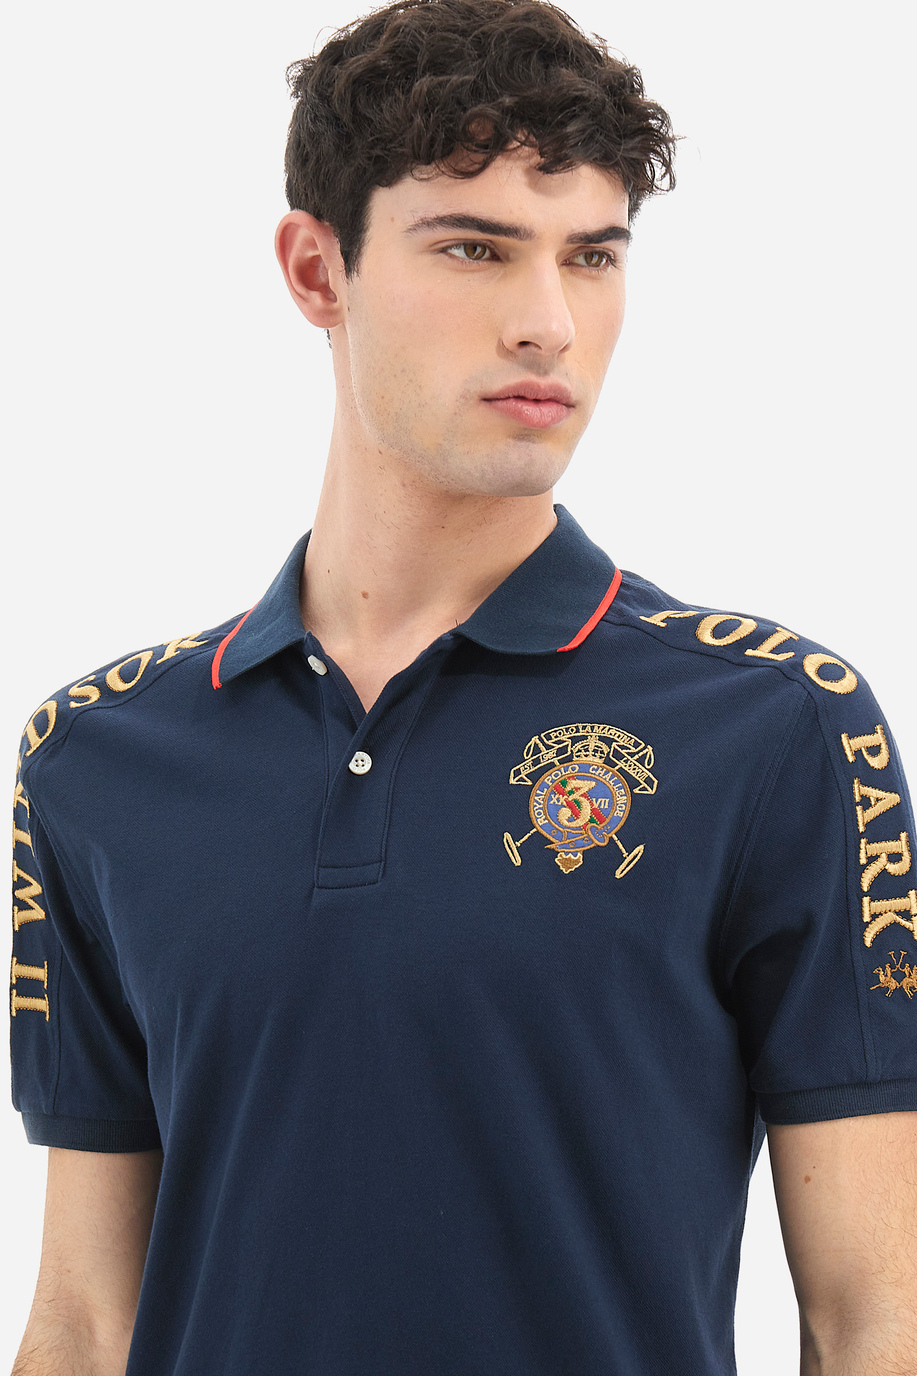 Herren-Kurzarm-Poloshirt aus Stretch-Baumwolle mit normaler Passform - Vinicio - Guards - England | La Martina - Official Online Shop